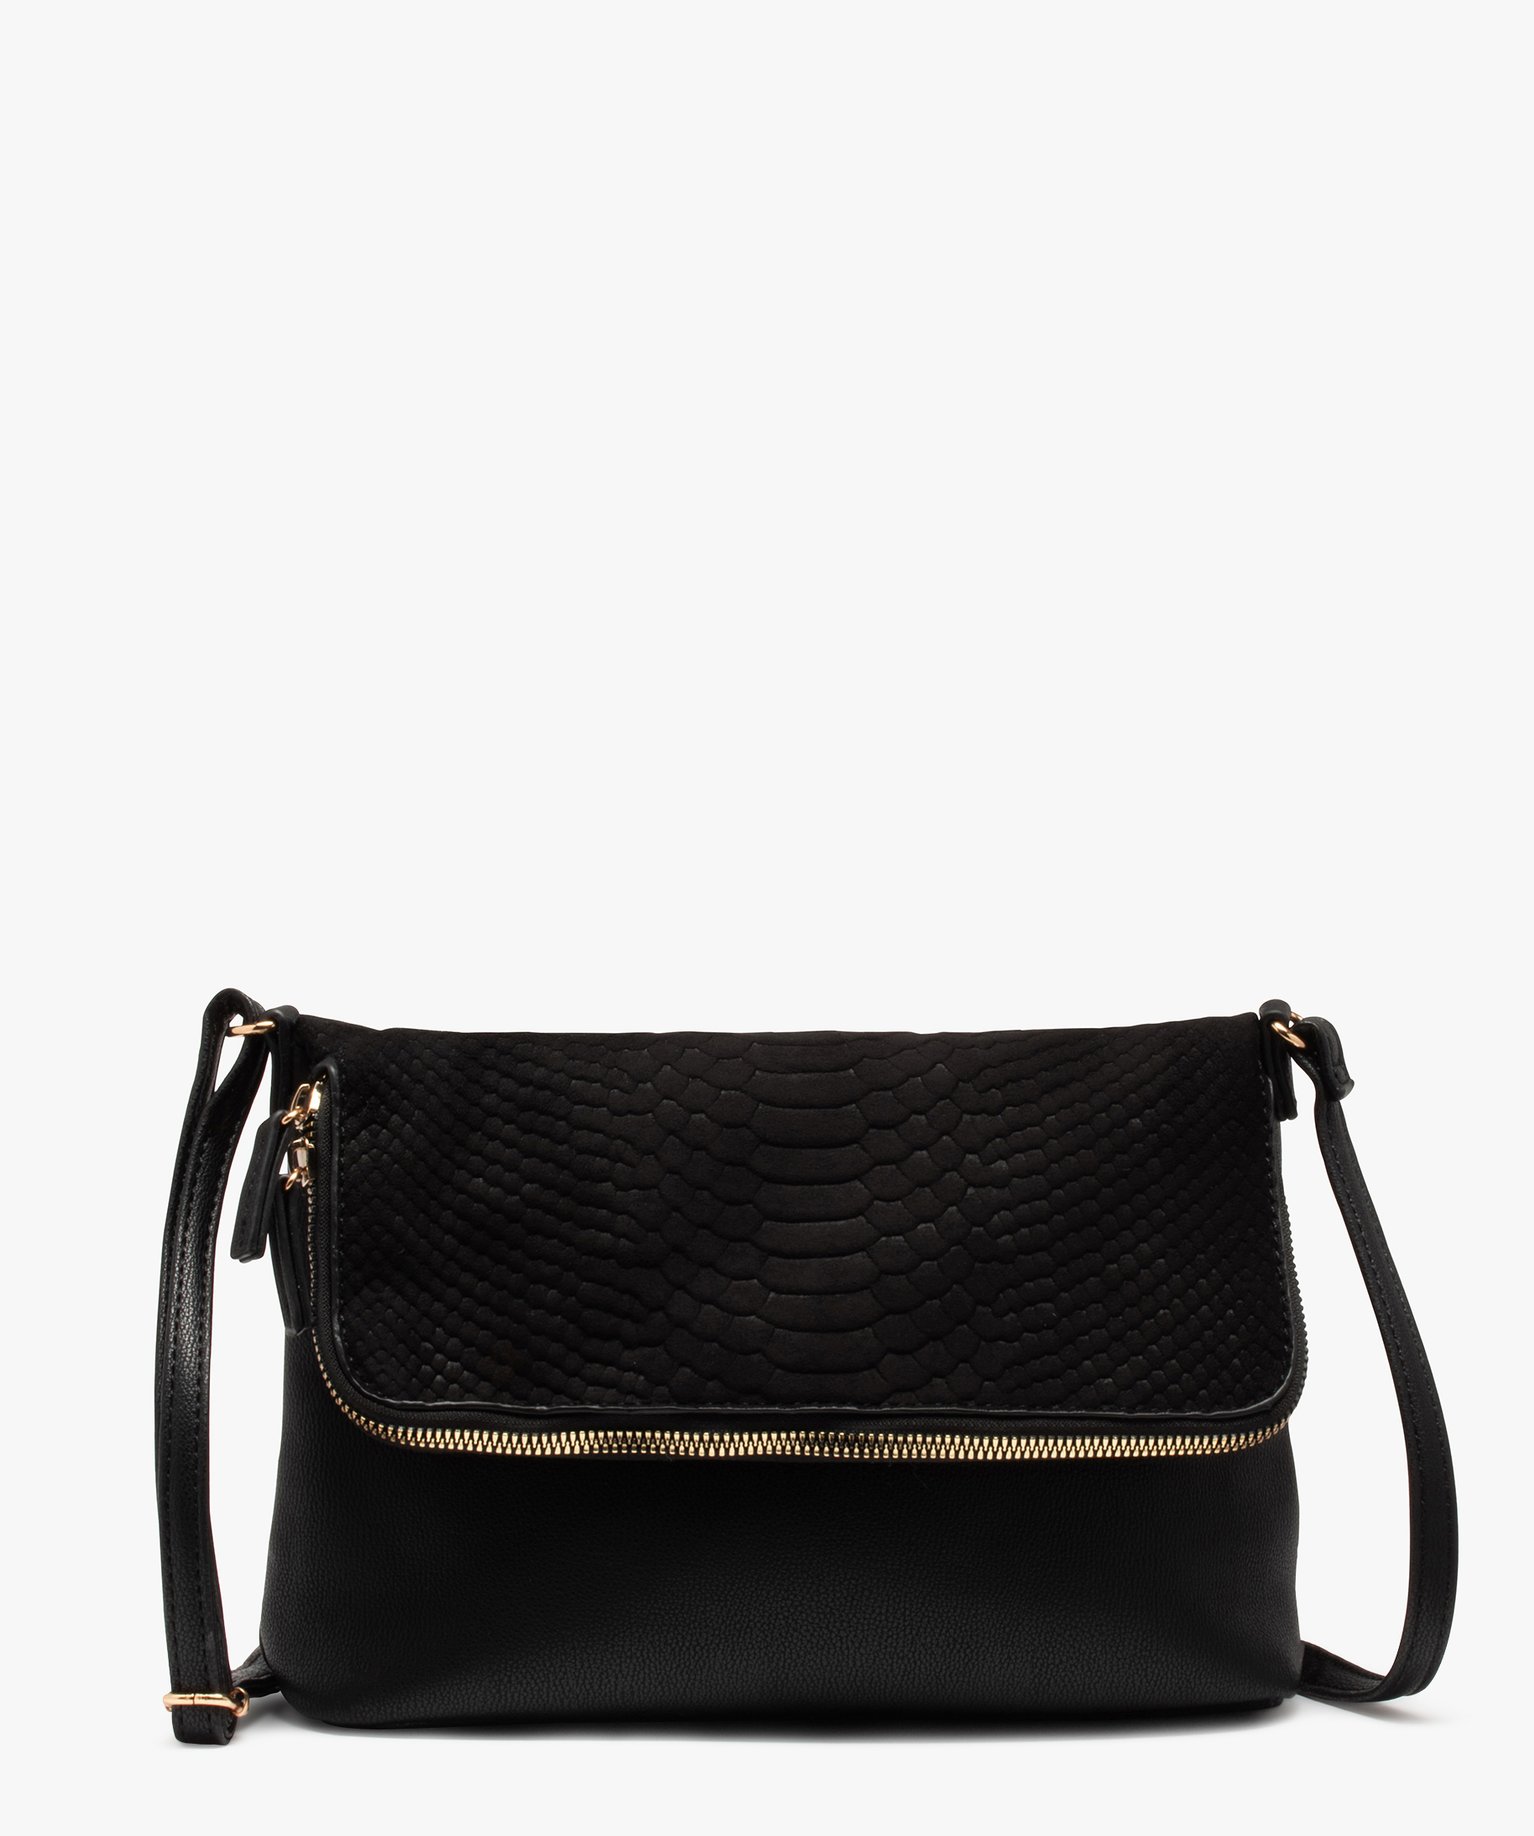 sac femme avec rabat zippe en matiere texturee noir sacs bandouliere